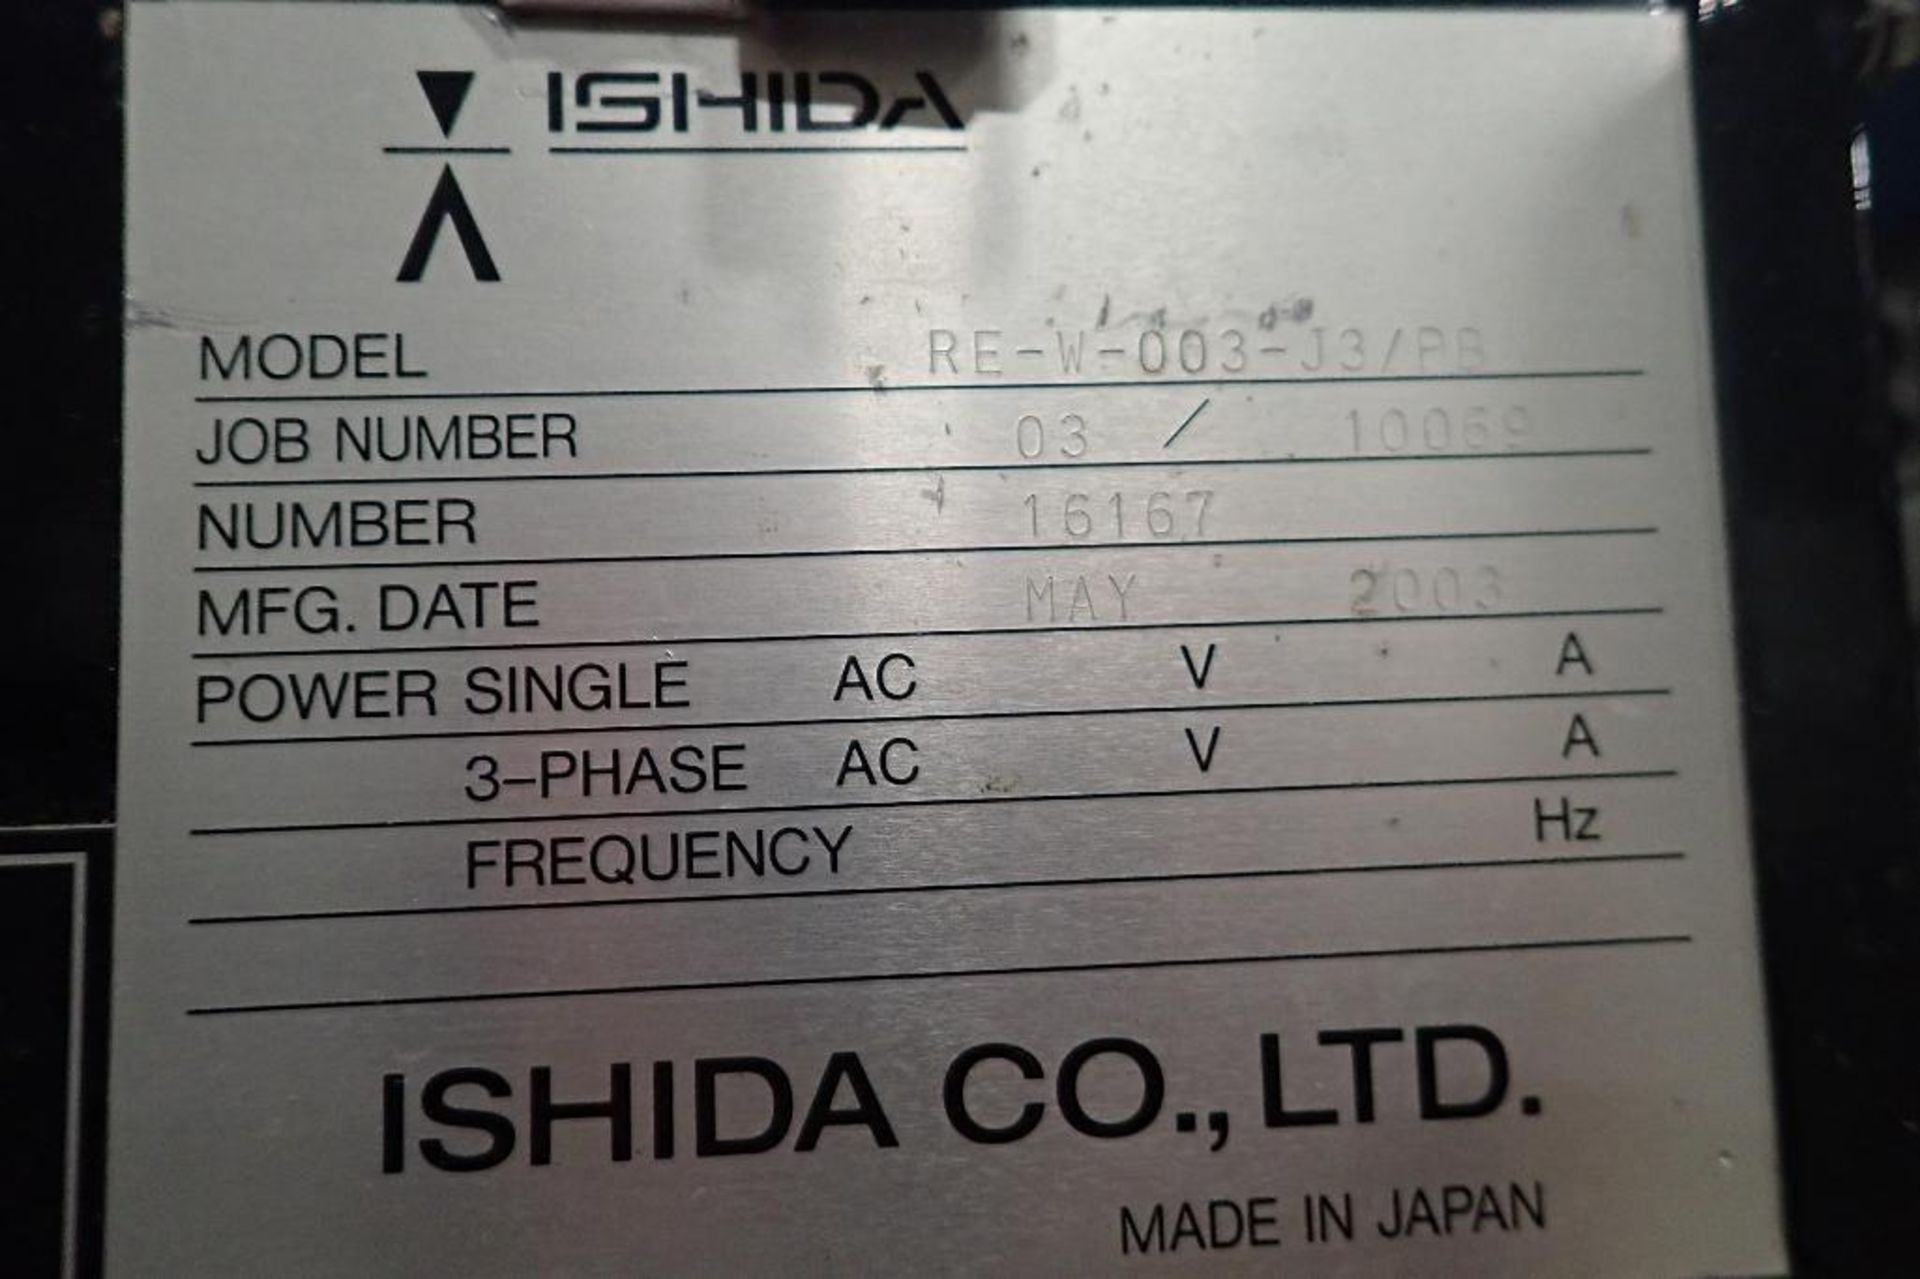 2003 Ishida check weigher, Model DACS-W-003-SB/PB-I, SN 16167, 300 g capacity, 6 in. wide belt. **Ri - Image 8 of 8